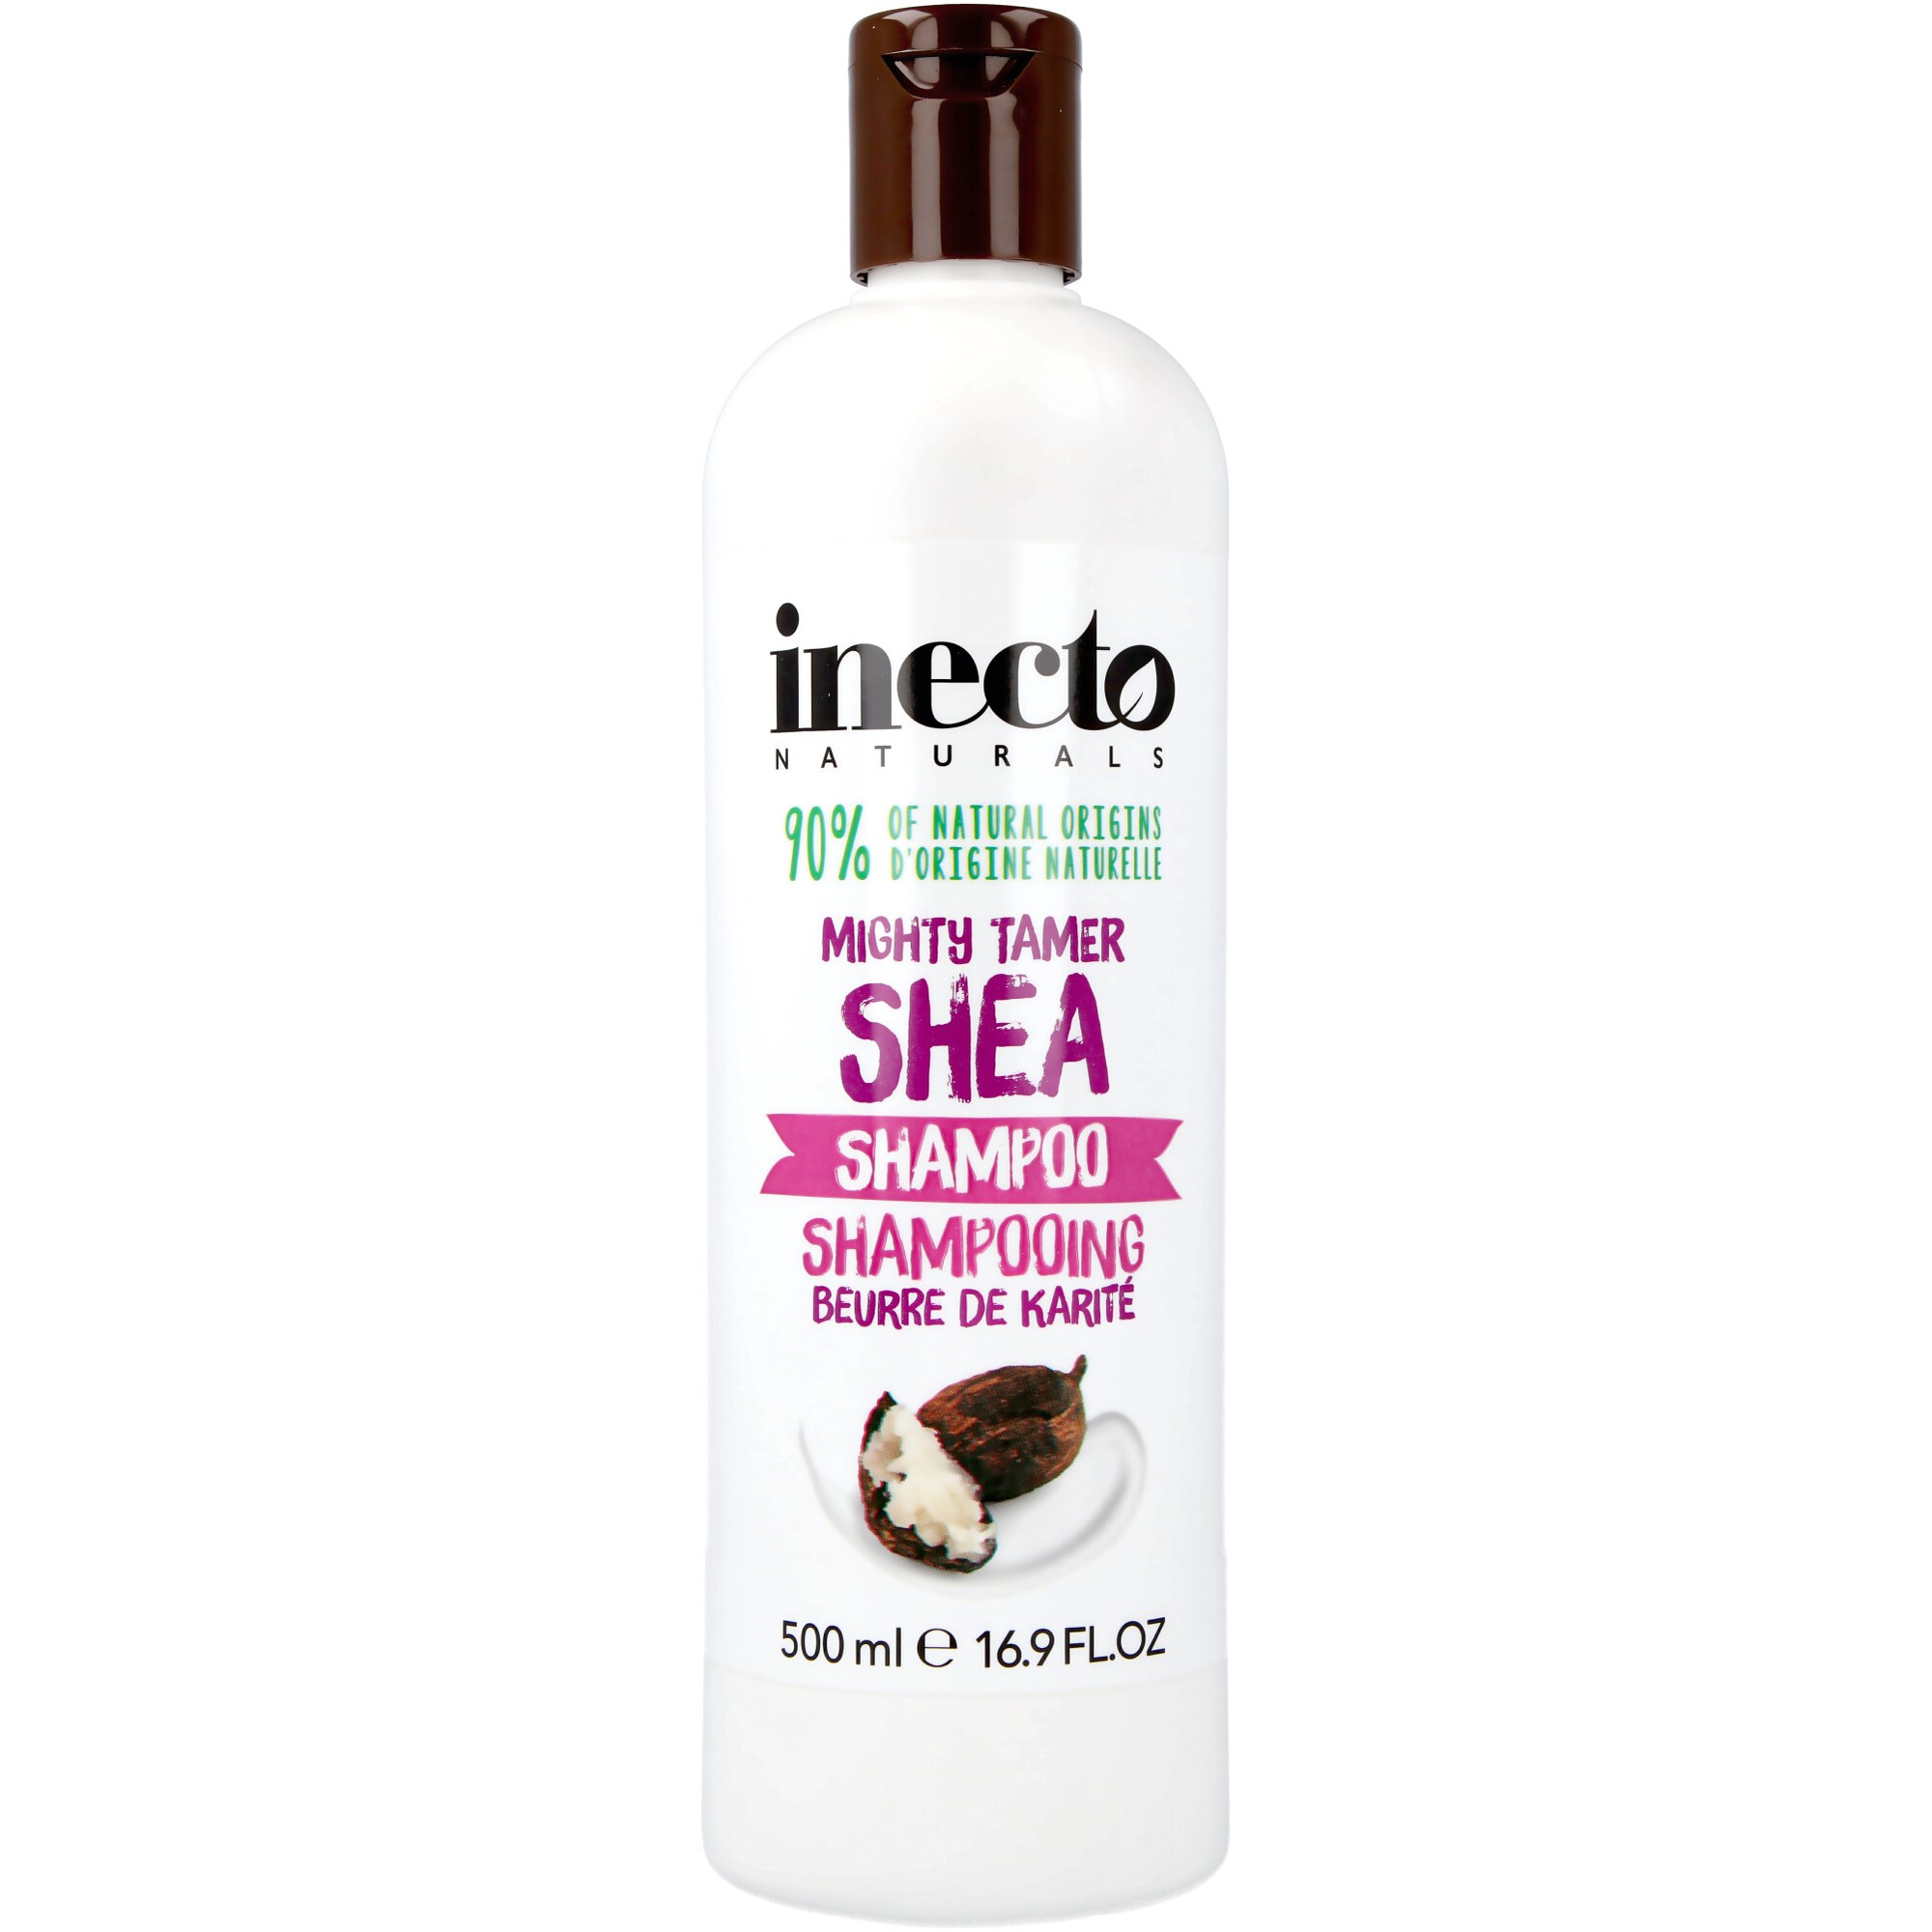 Inecto Naturals Mighty Tamer Shea shampoo 500 ml